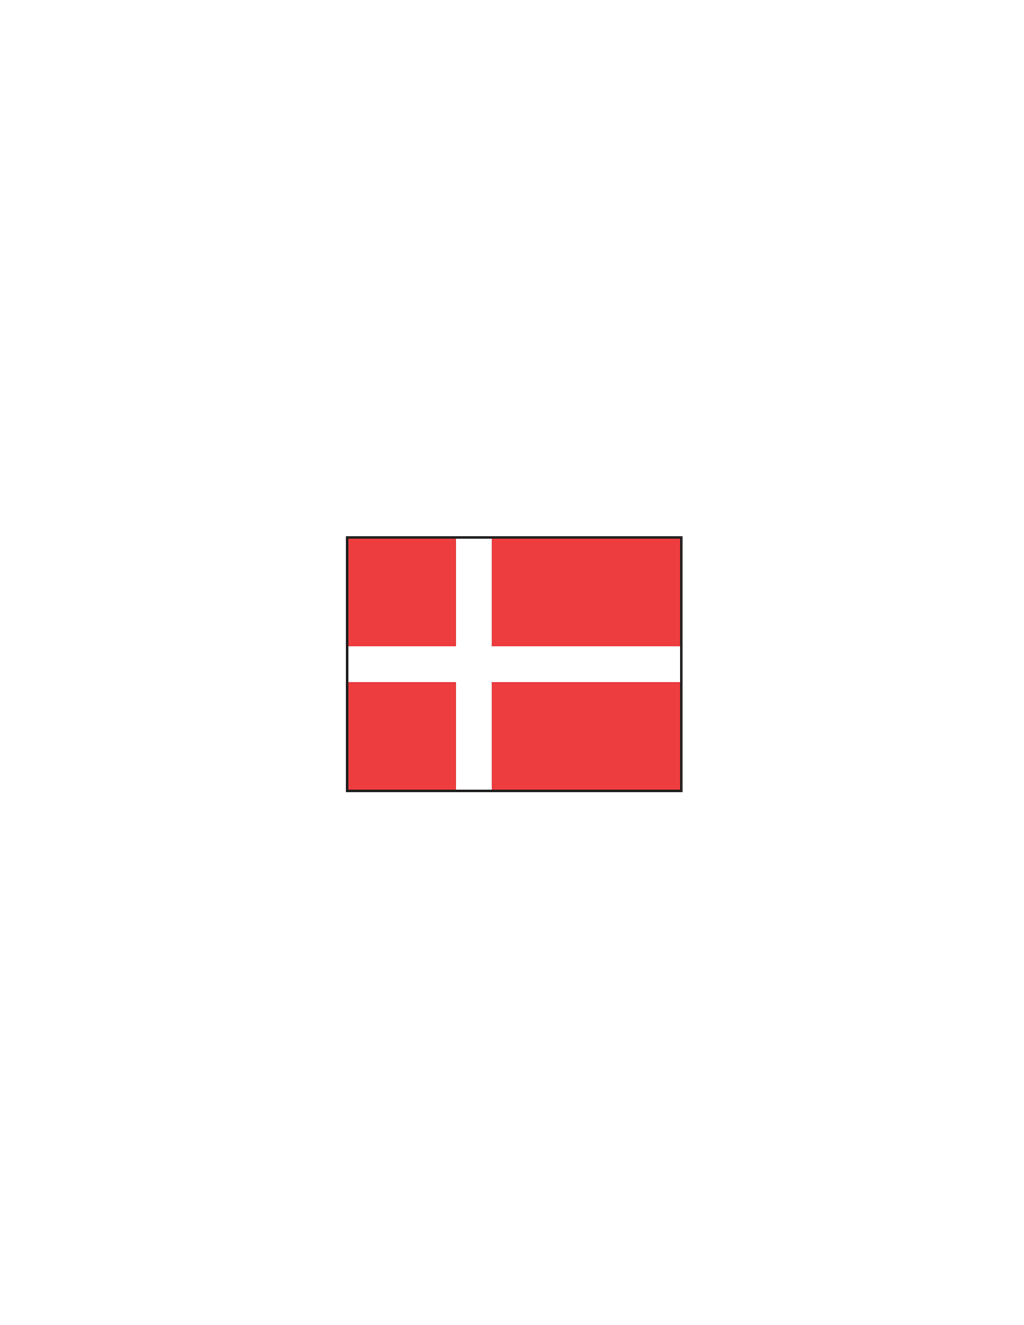 Denmark logotype, transparent .png, medium, large